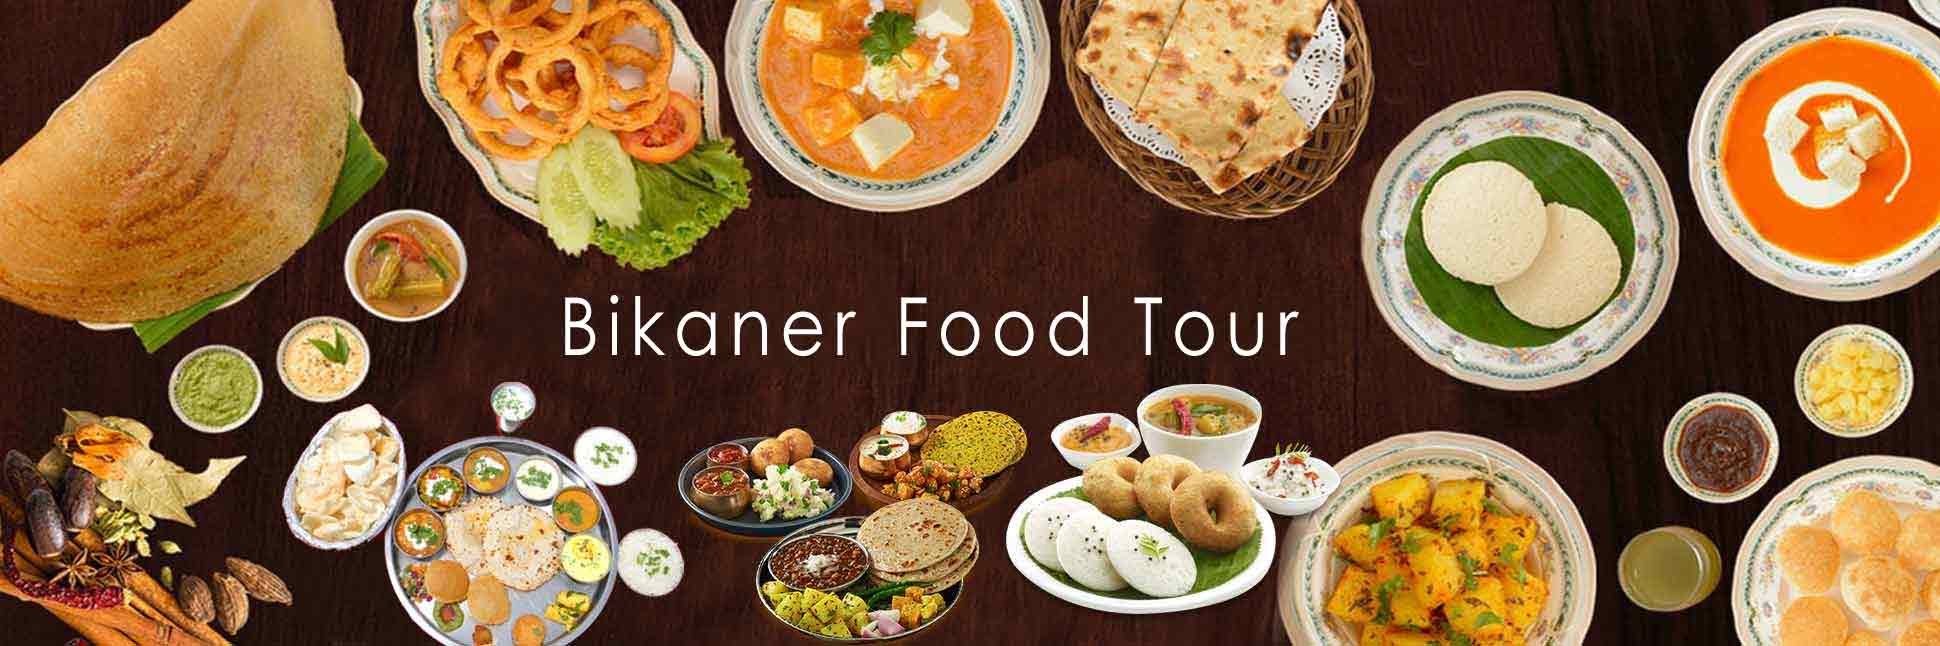 Bikaner Food Tour